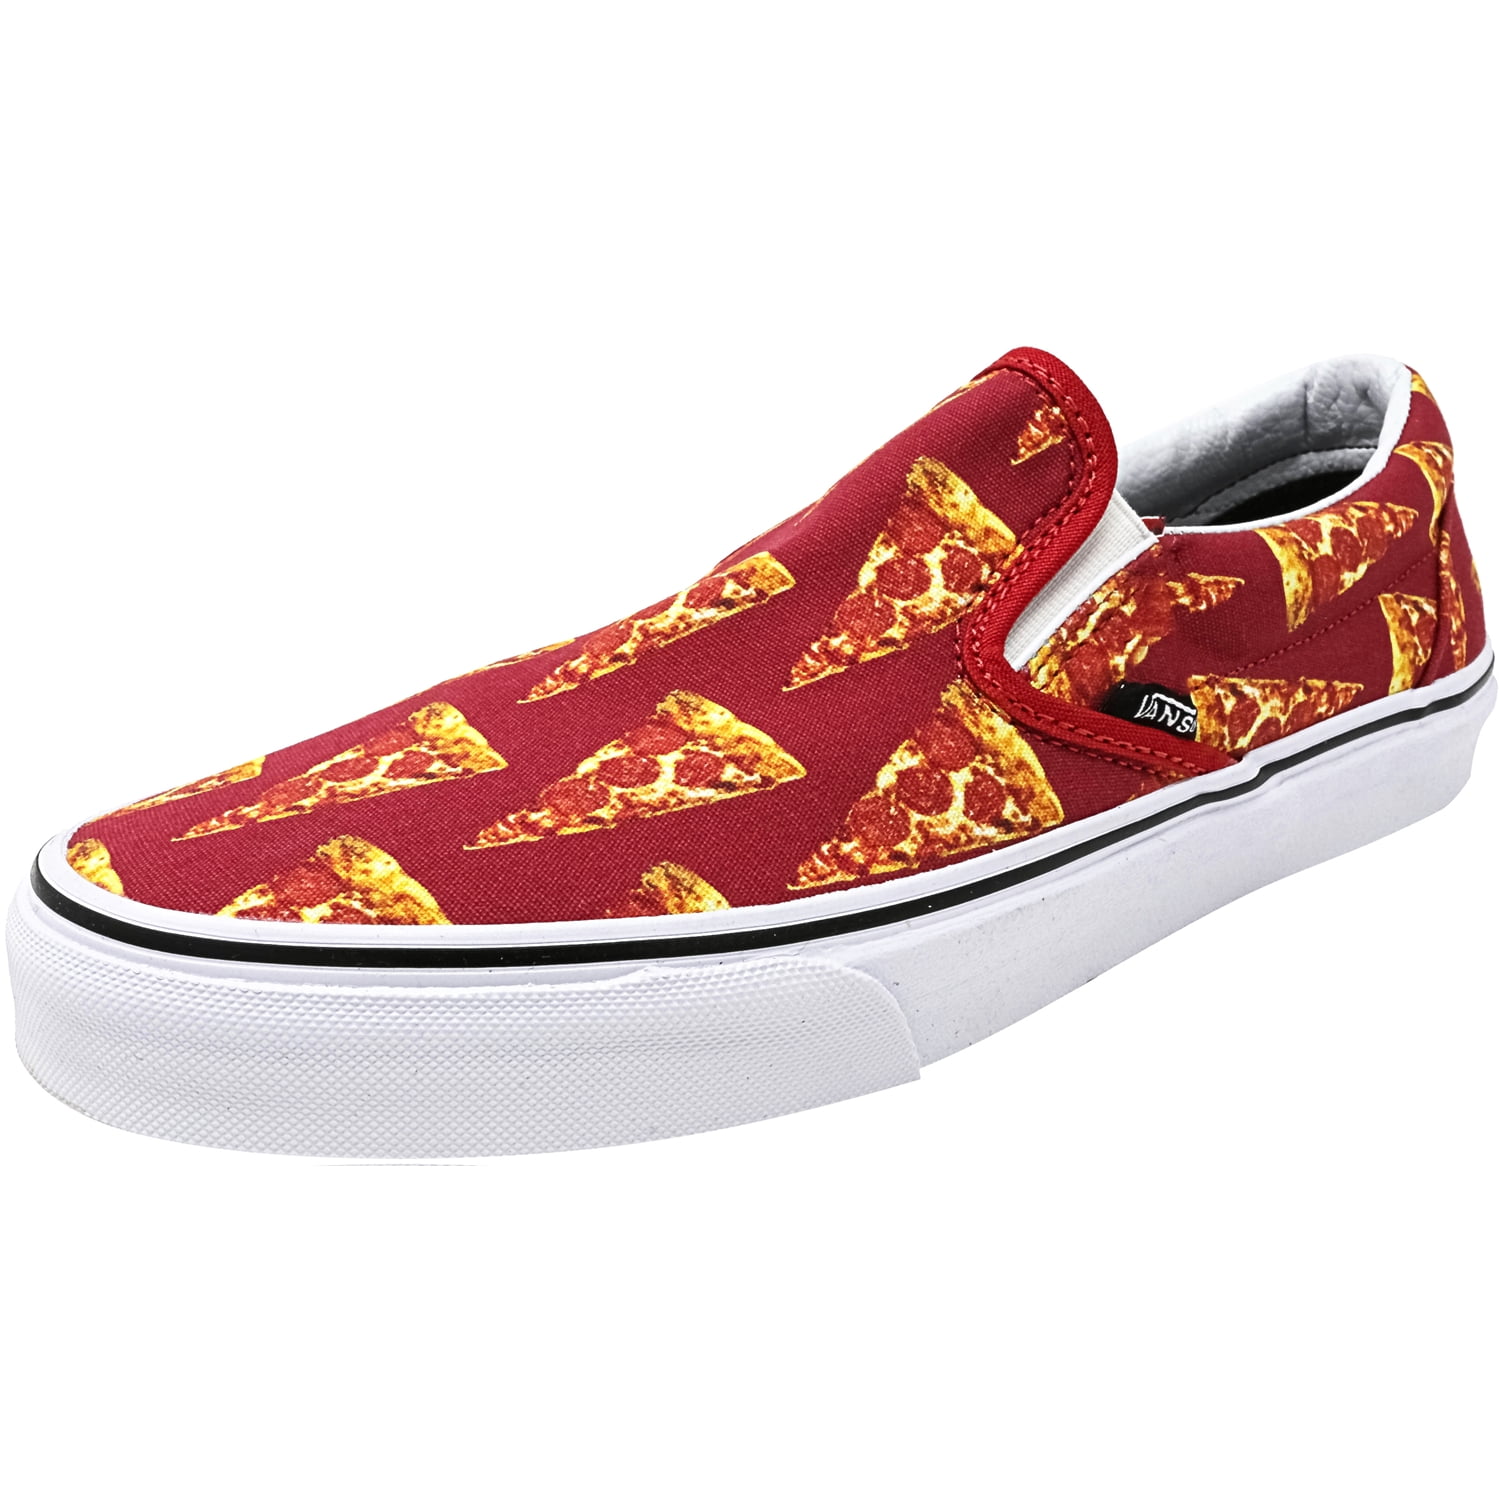 Vans Slip-On Late Night Mars Red / Pizza Skateboarding - 10M 8.5M - Walmart.com